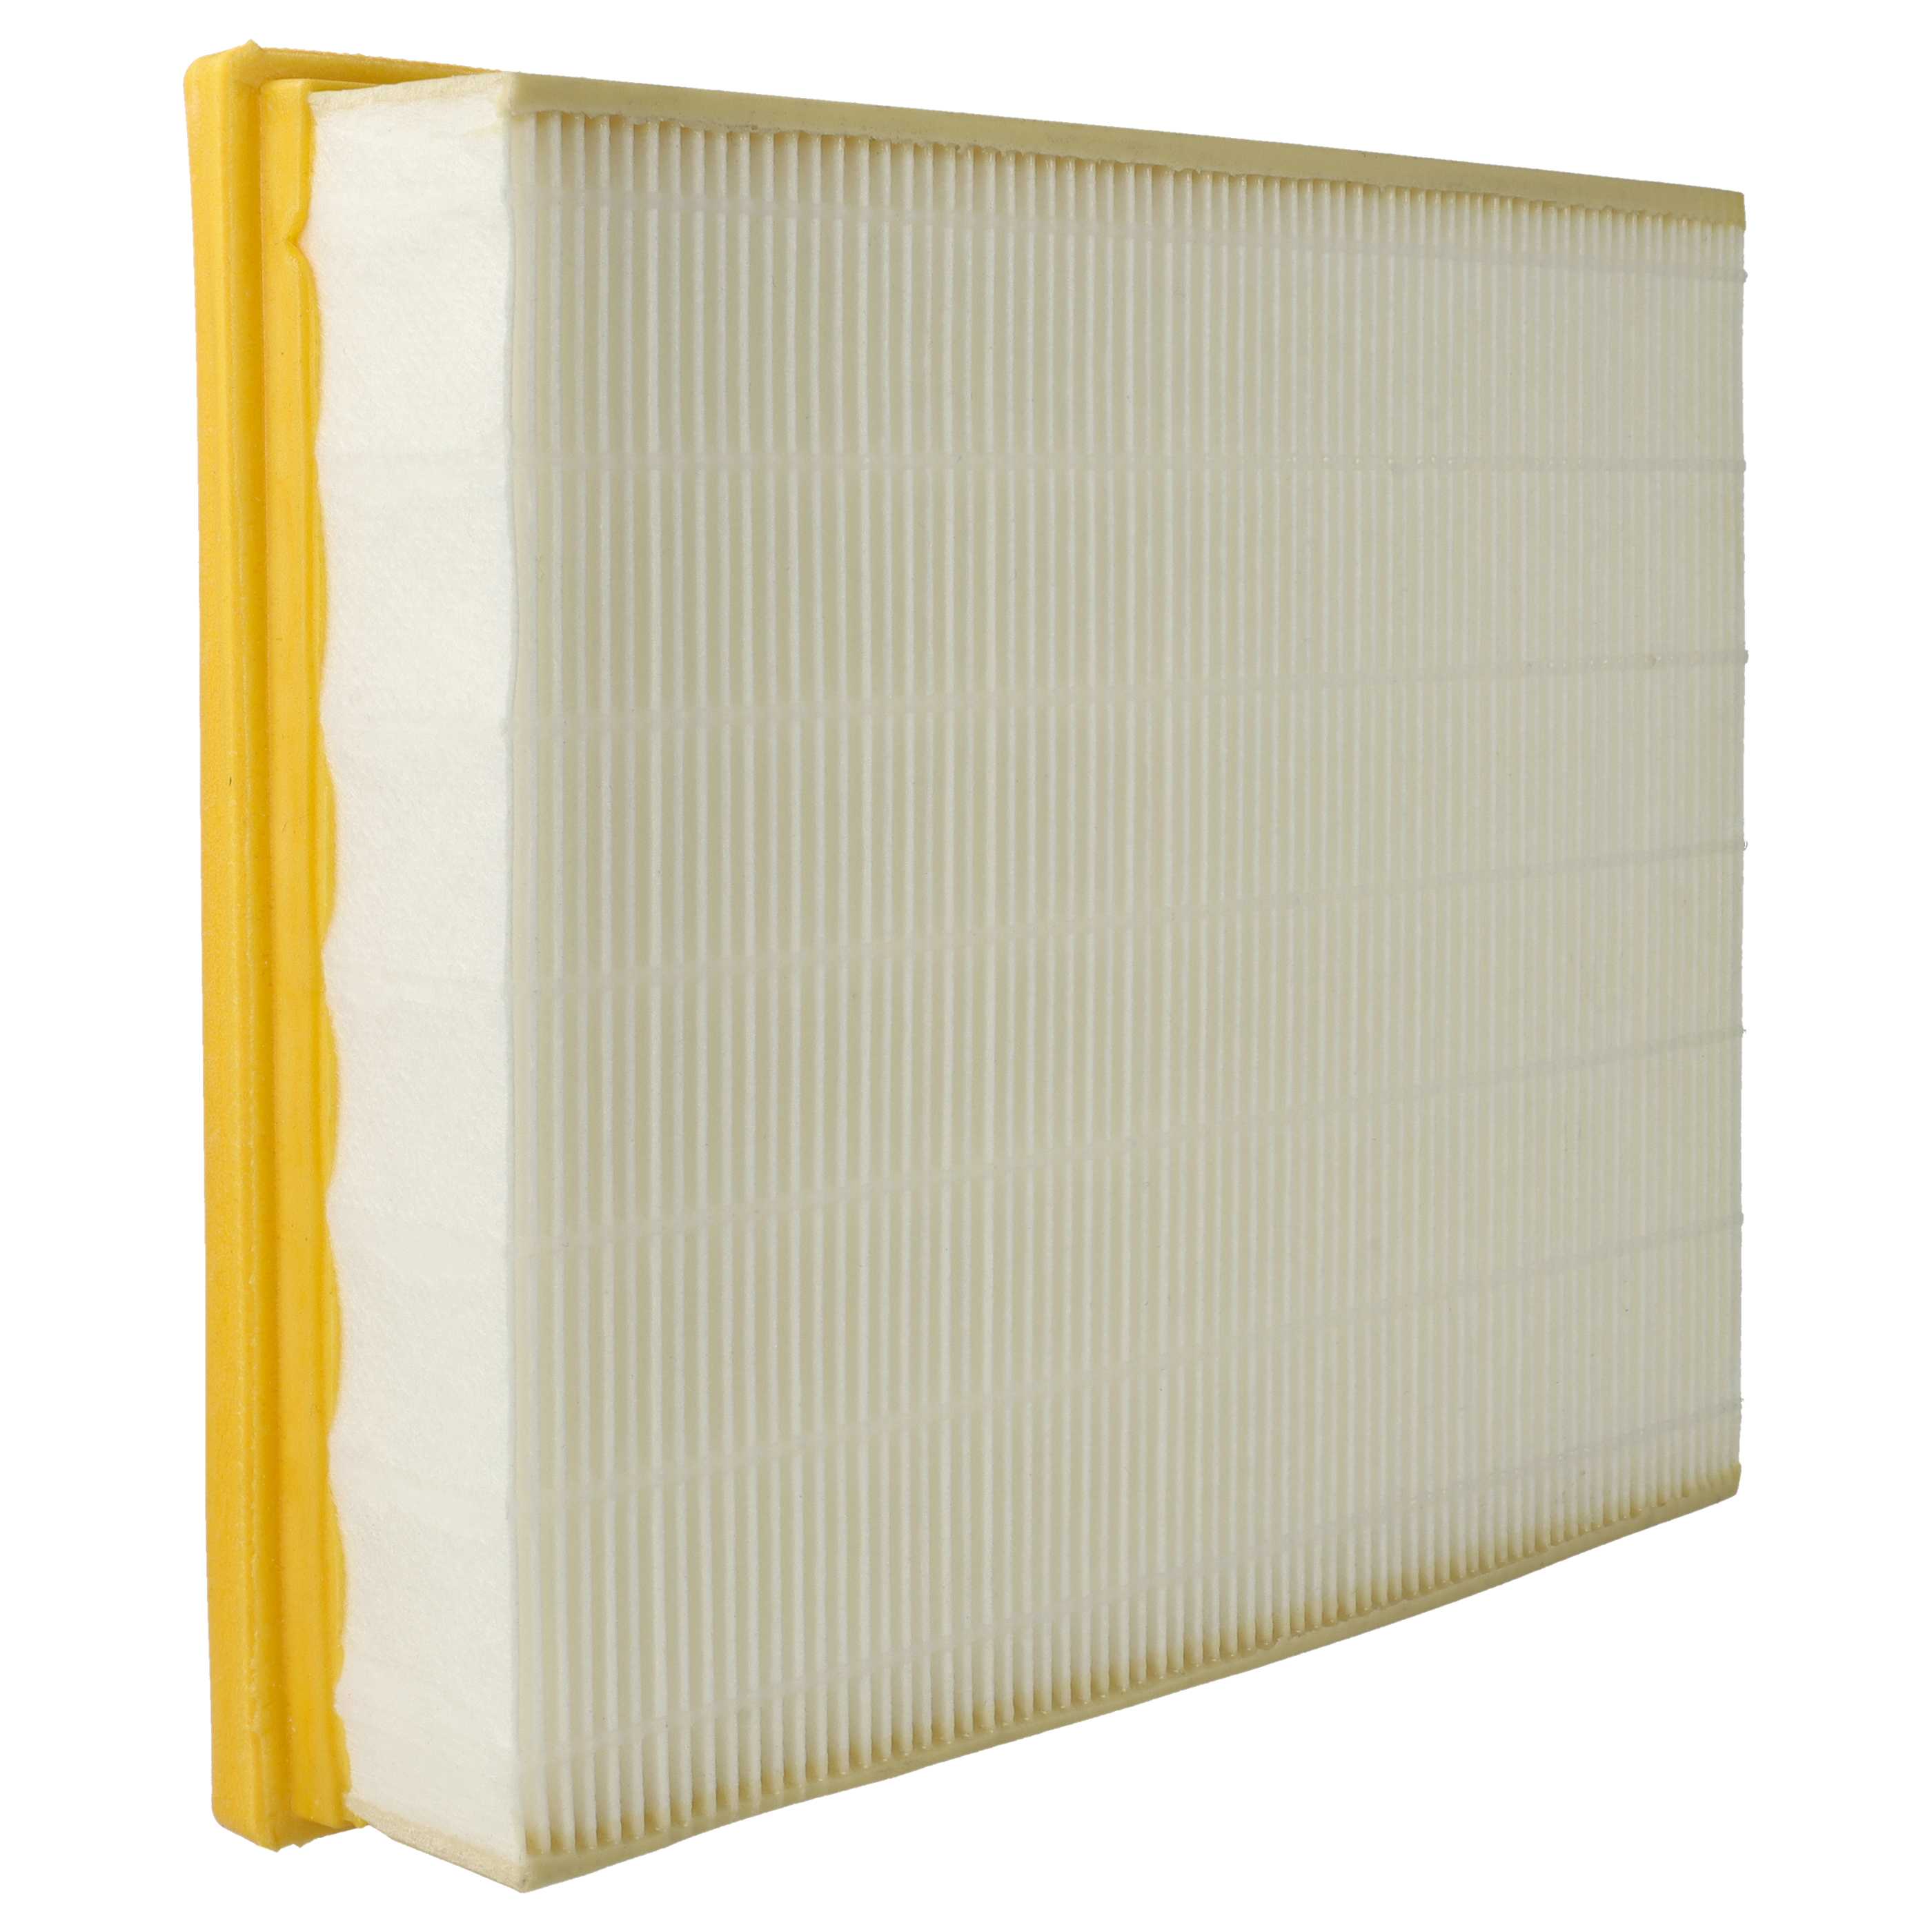 3x Filtro reemplaza Festo 496170, 496172, 4.96170, 4.96172 para aspiradora - filtro Hepa blanco / amarillo